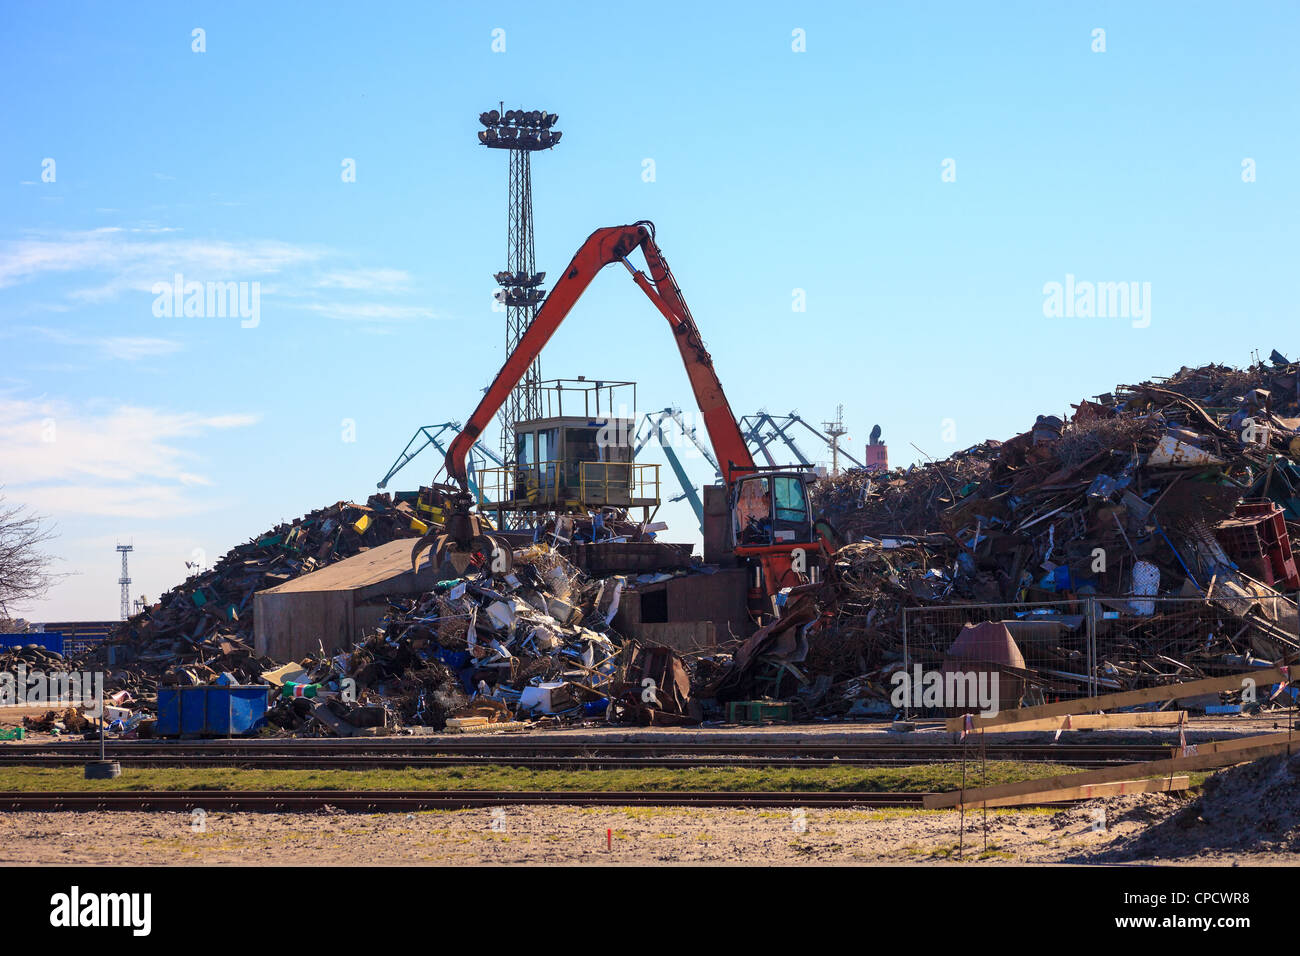 Mechanical crane grabber working in a scrapyard. Stock Photo